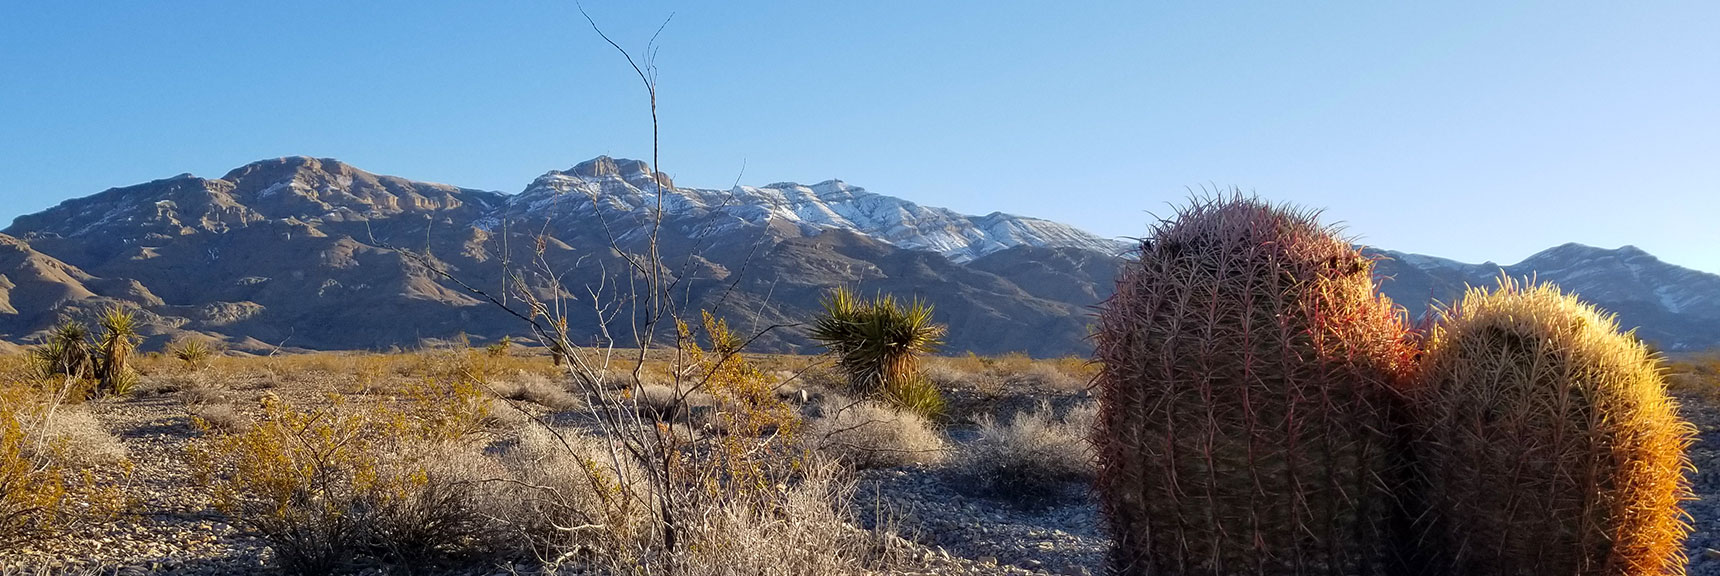 Gass Peak Sunrise After Snowfall, Nevada